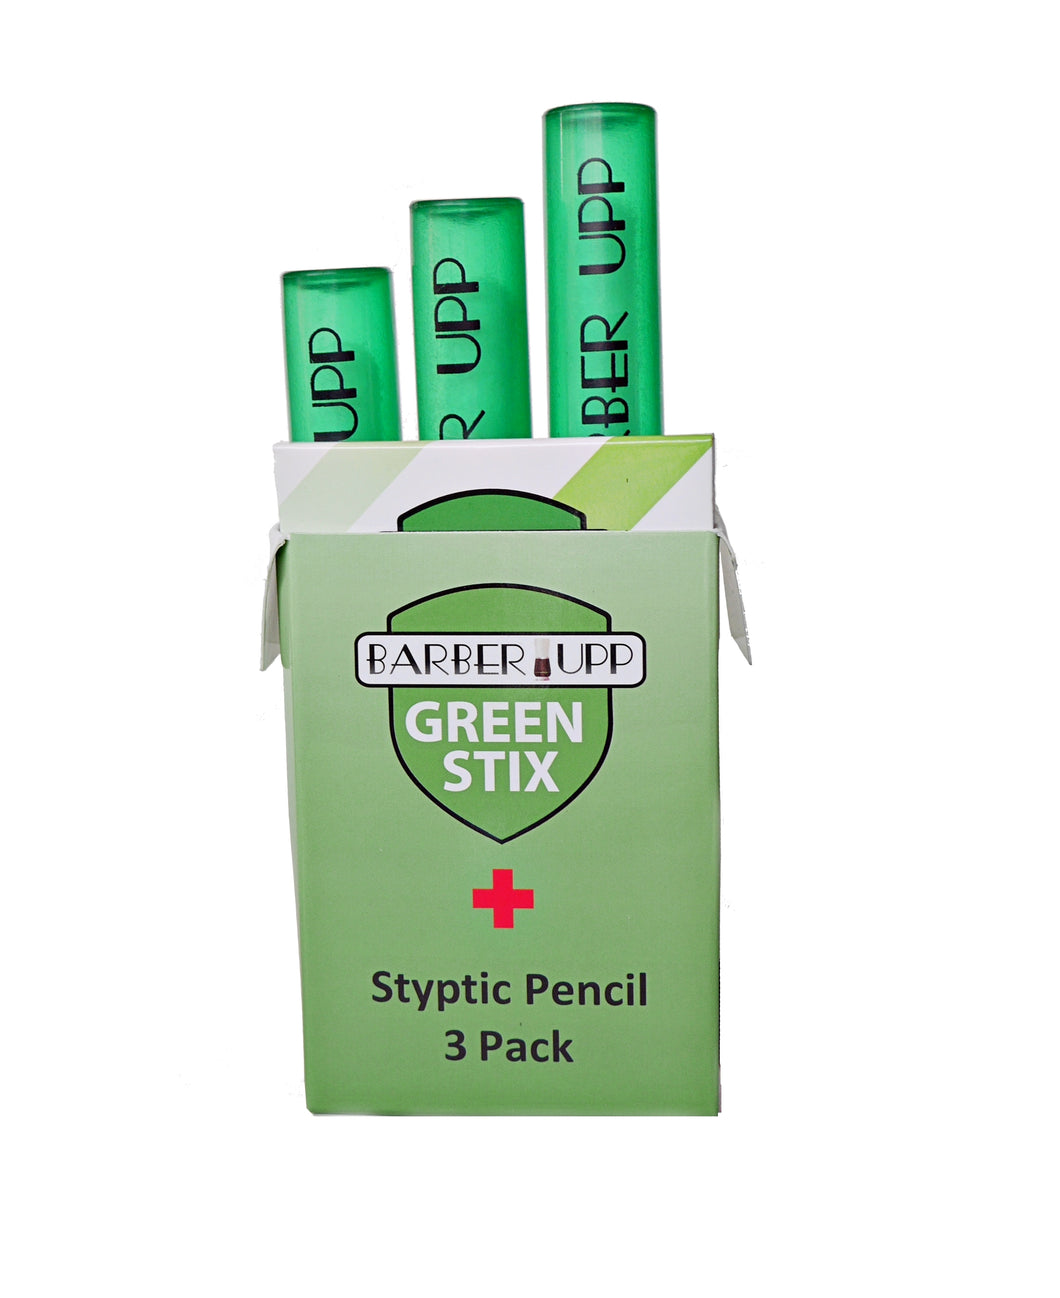 BarberUpp Green Stix + Styptic Pencil Set - Aluminum Sulfate Anti-Bleed Accessories for Shaving Nicks, Razor Cuts, Canker Sore - Block & Stop Bleeding Fast - For Men & Women, 3 Pencils & 20 Sticks